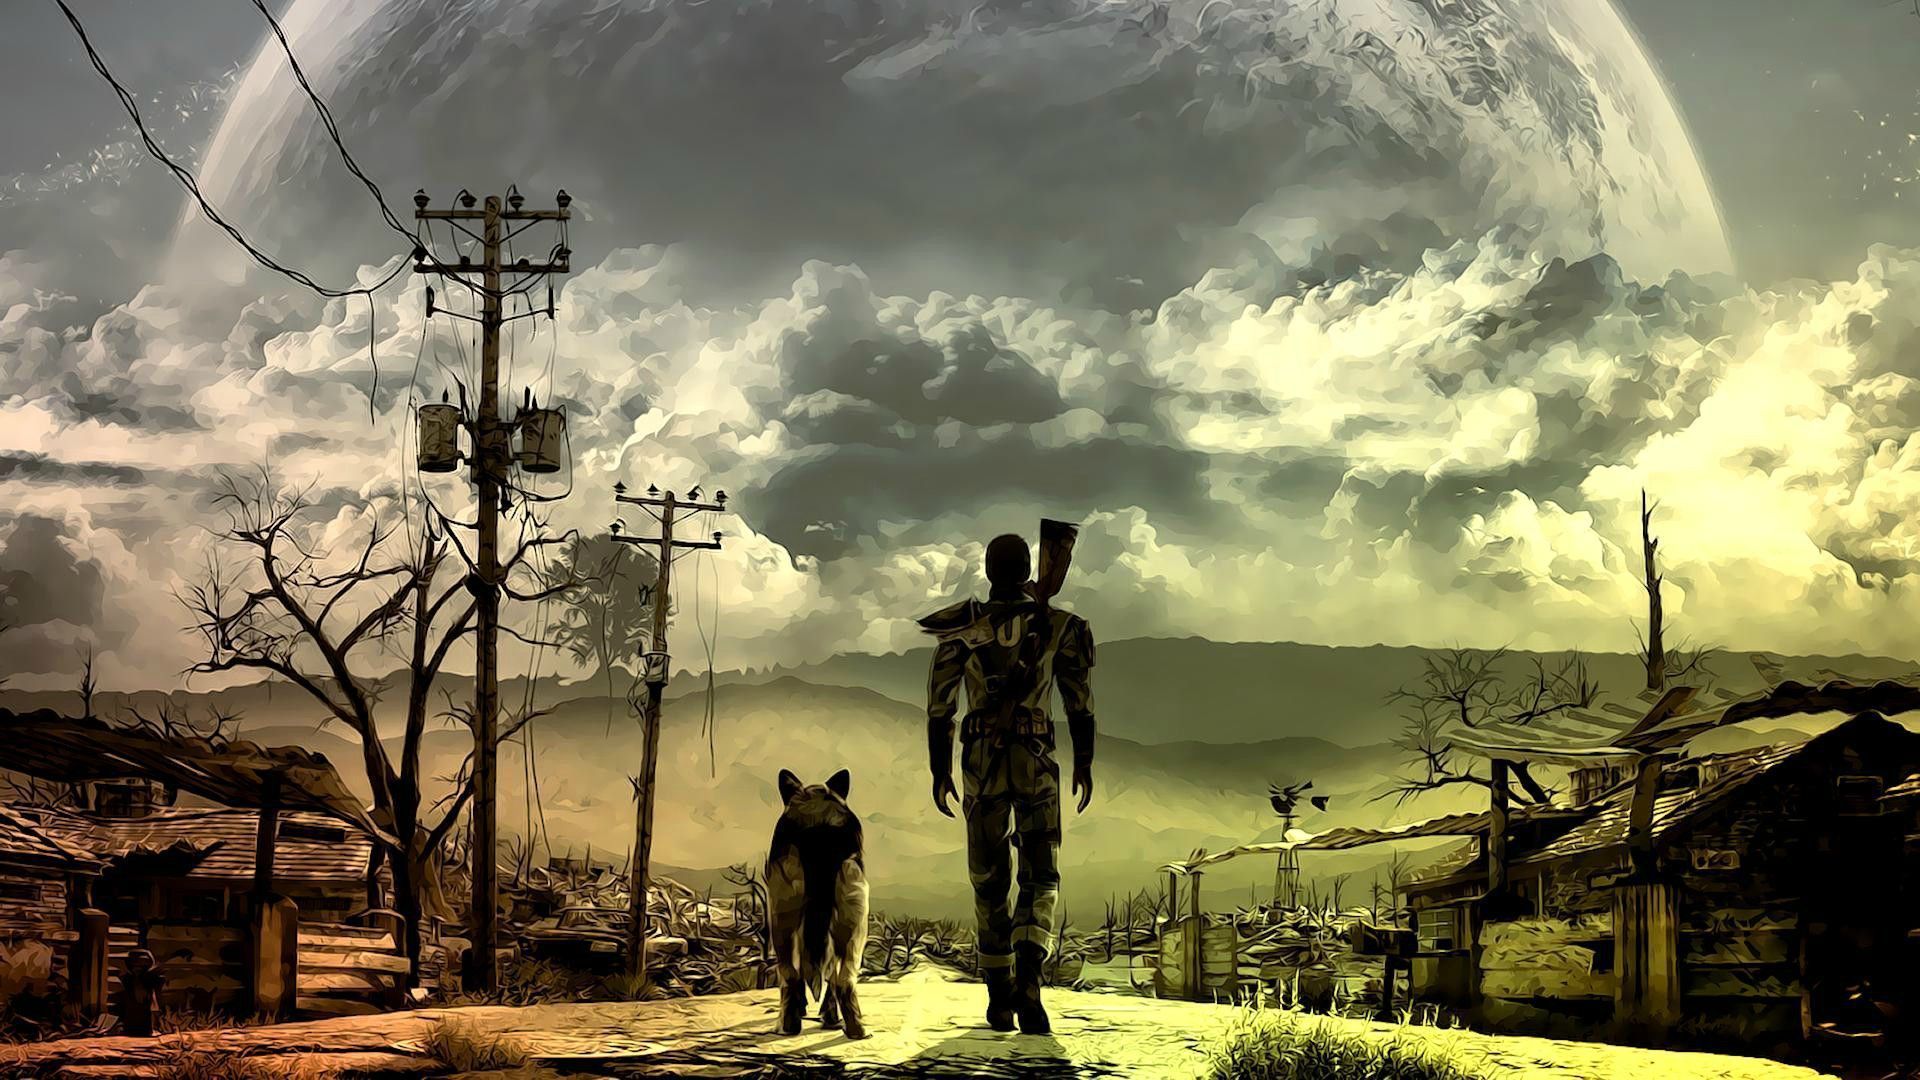 High Res Fallout 3 wallpaper gaming